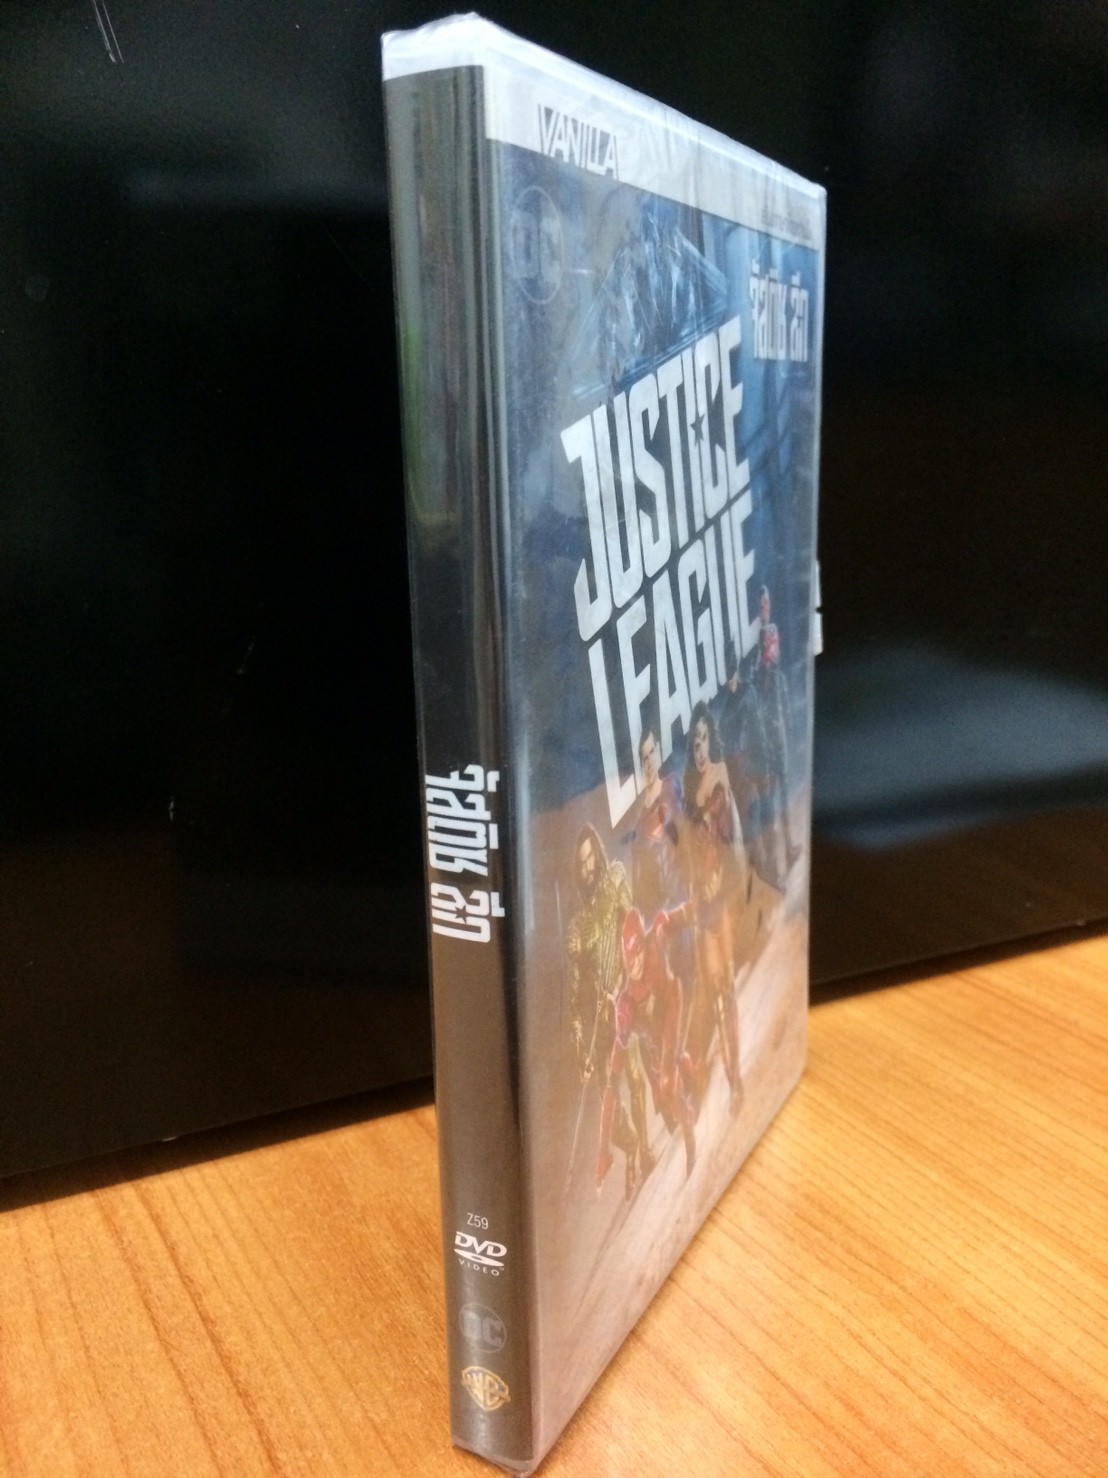 DVDหนัง จัสติซ ลีก JUSTICE LEAGUE (DVDTHAI89259-จัสติซลีก) พากย์ไทย เท่านั้น  หนัง หนังฮีโร่ DC ดีวีดี แผ่นหนัง ดูหนัง หนังดี แบบกล่อง มาสเตอร์แท้  STARMART